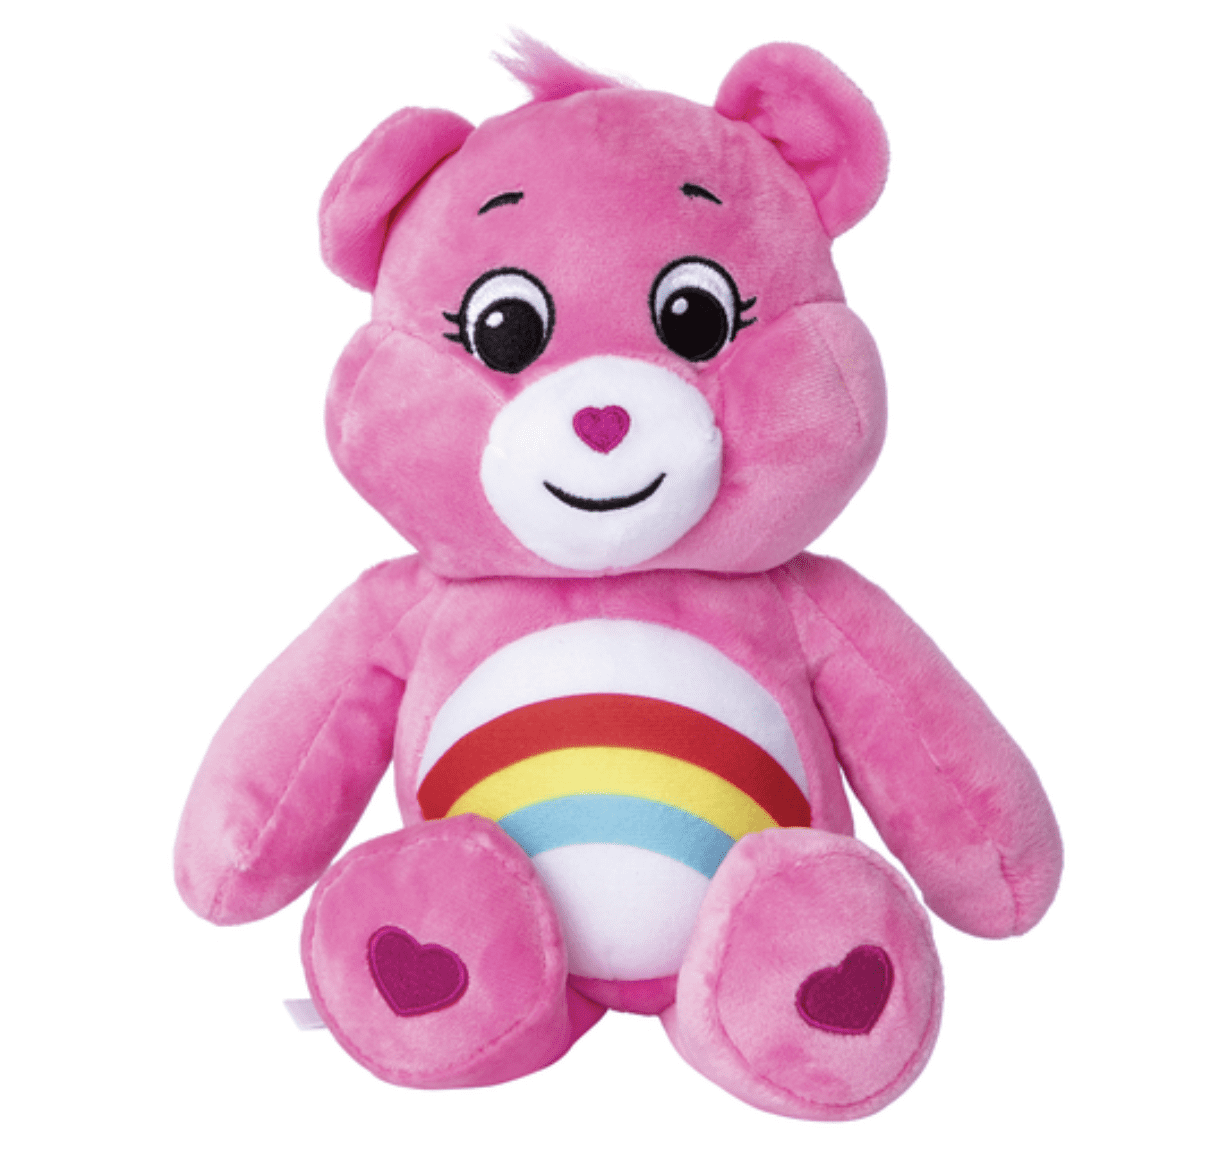 Care Bears™ Stuffed Animal - Pink Rainbow - Walmart.com